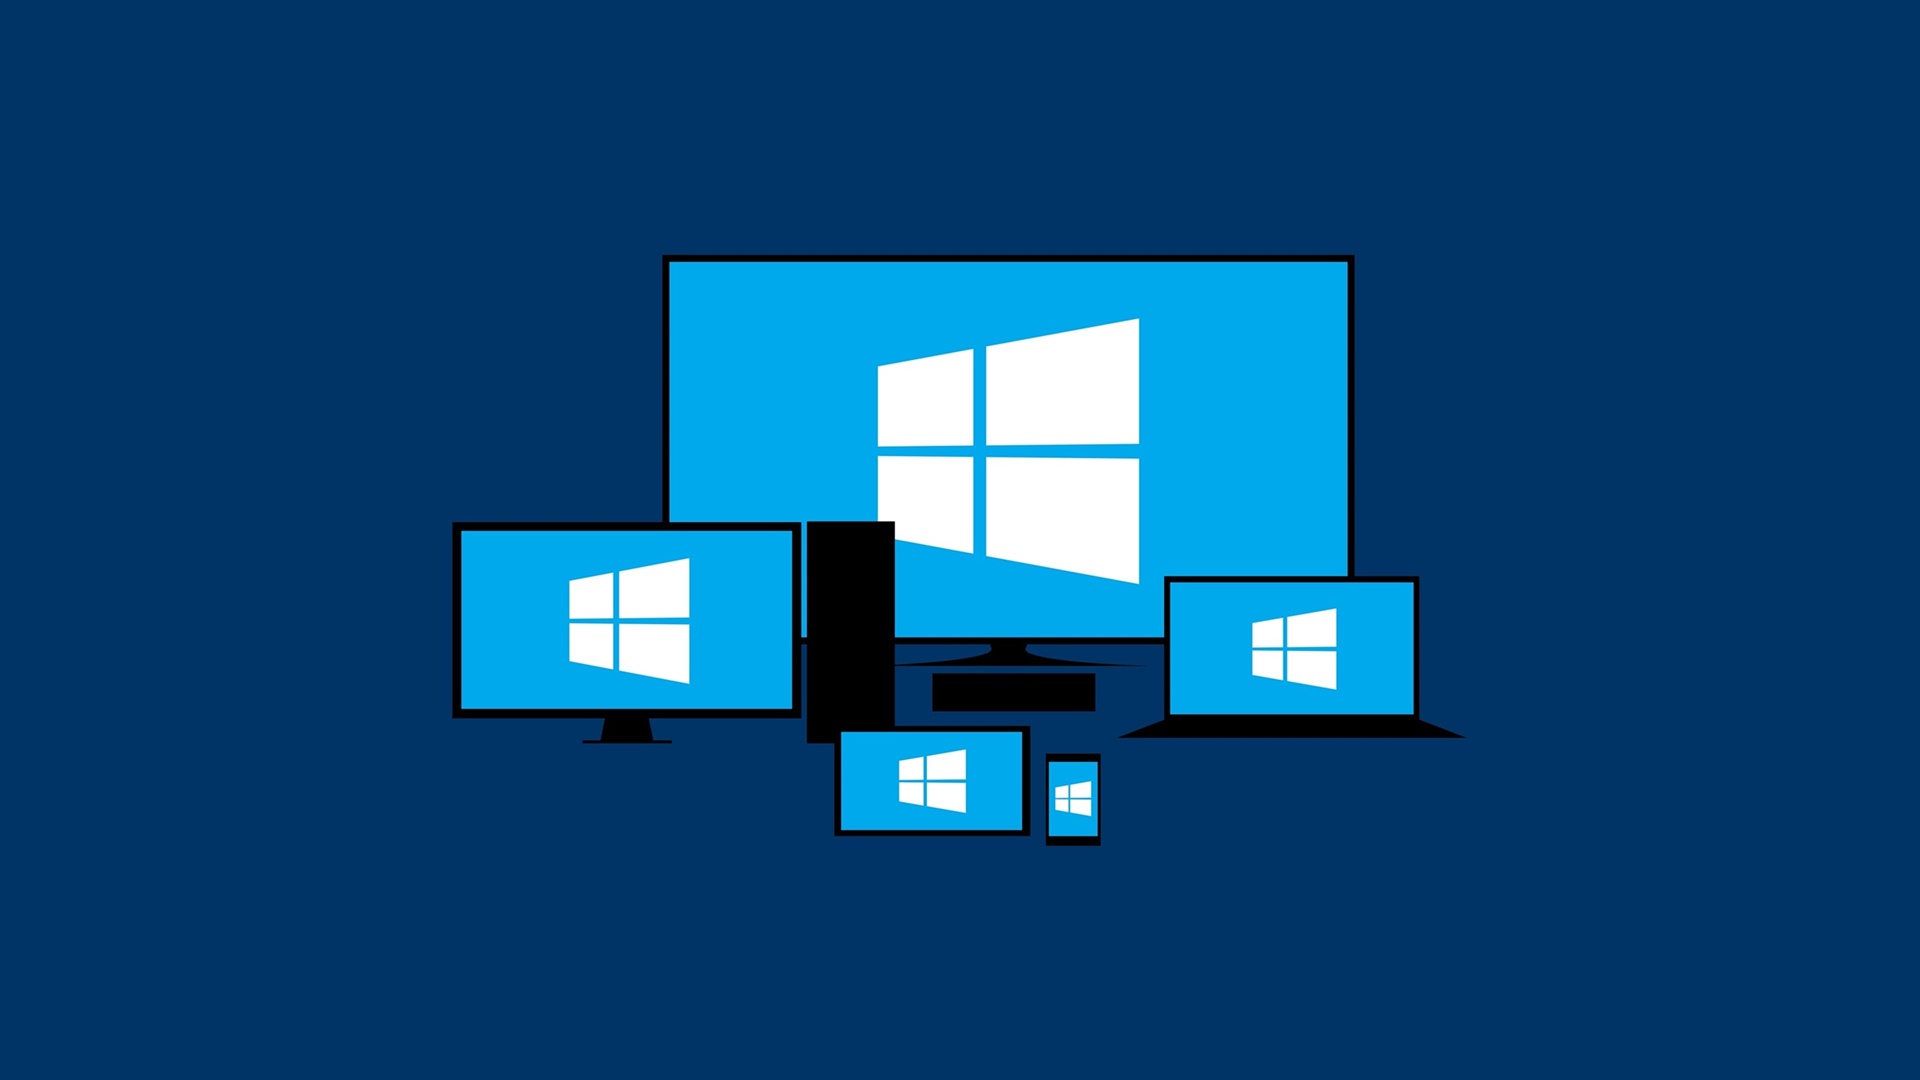 New Windows Logos Windows 10 Wallpapers 1920x1080